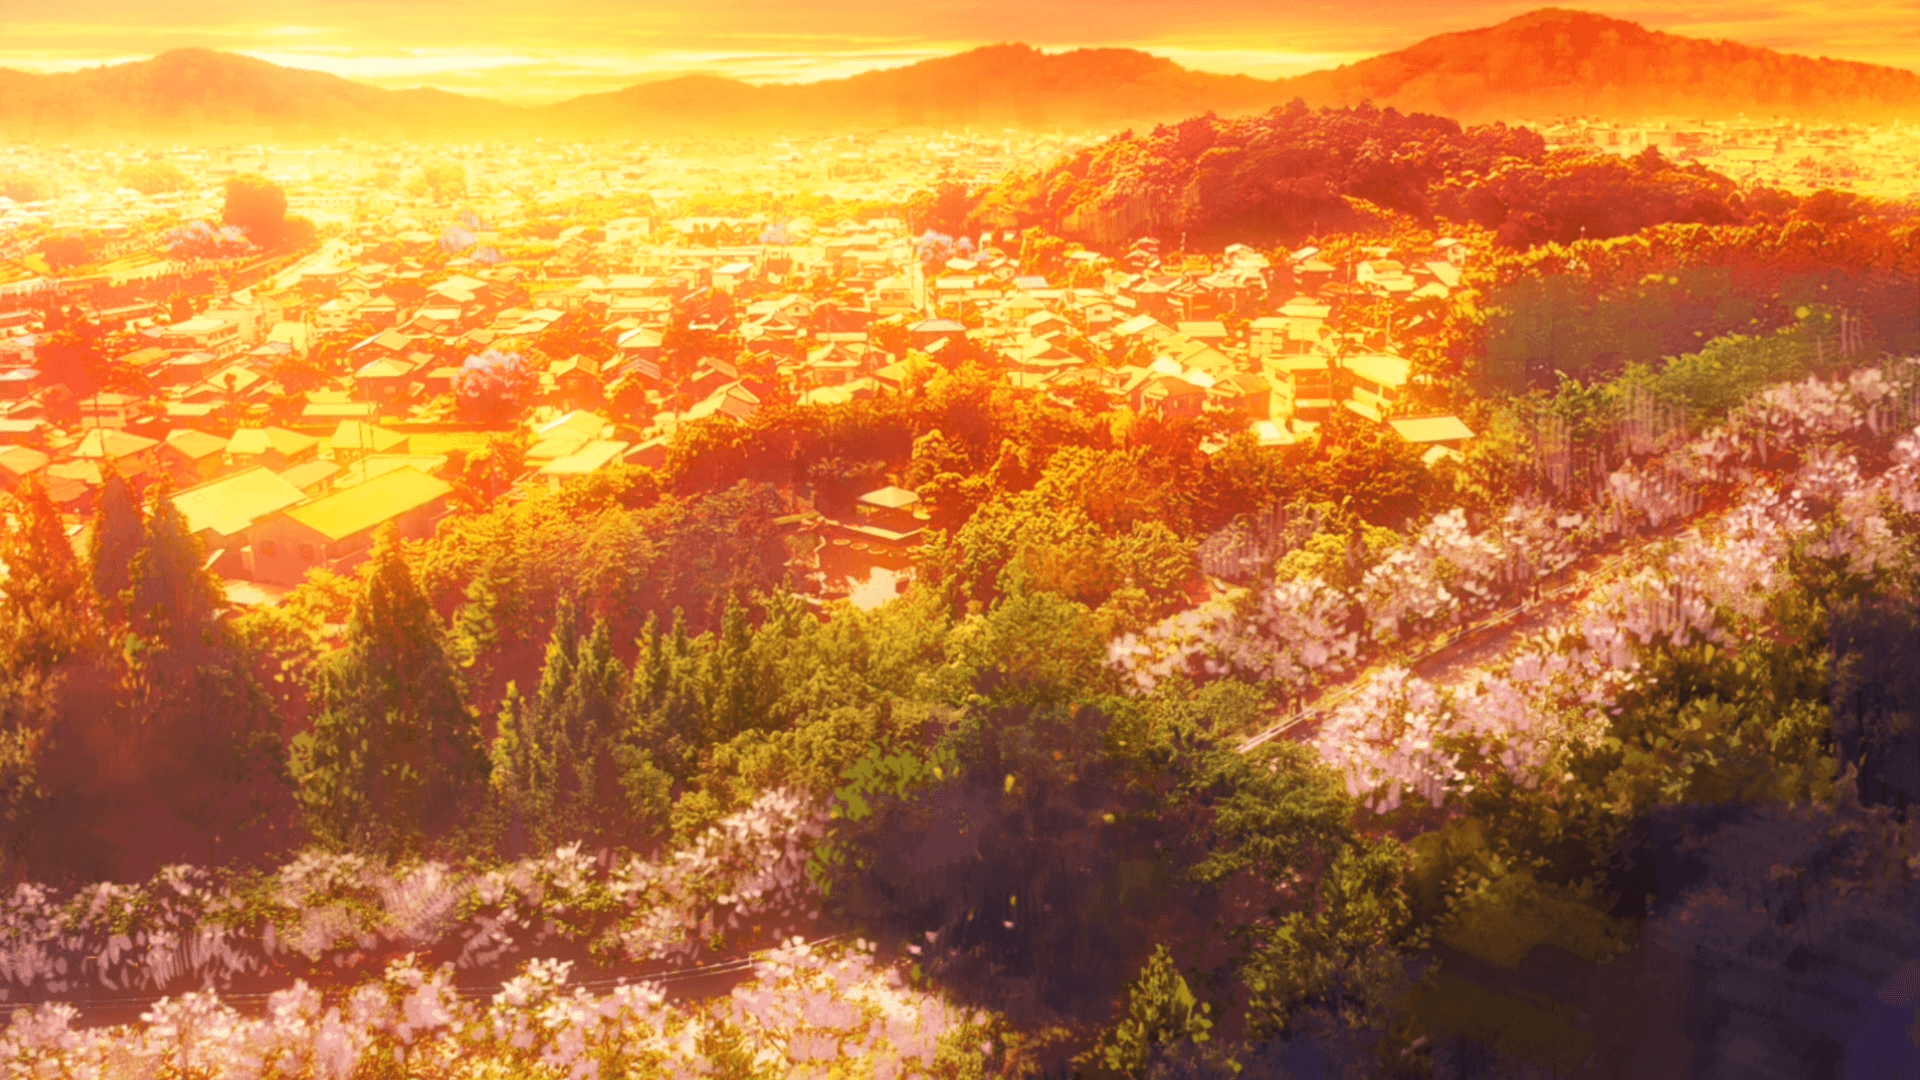 Beautiful Anime Scenery Wallpapers - Top Free Beautiful Anime Scenery